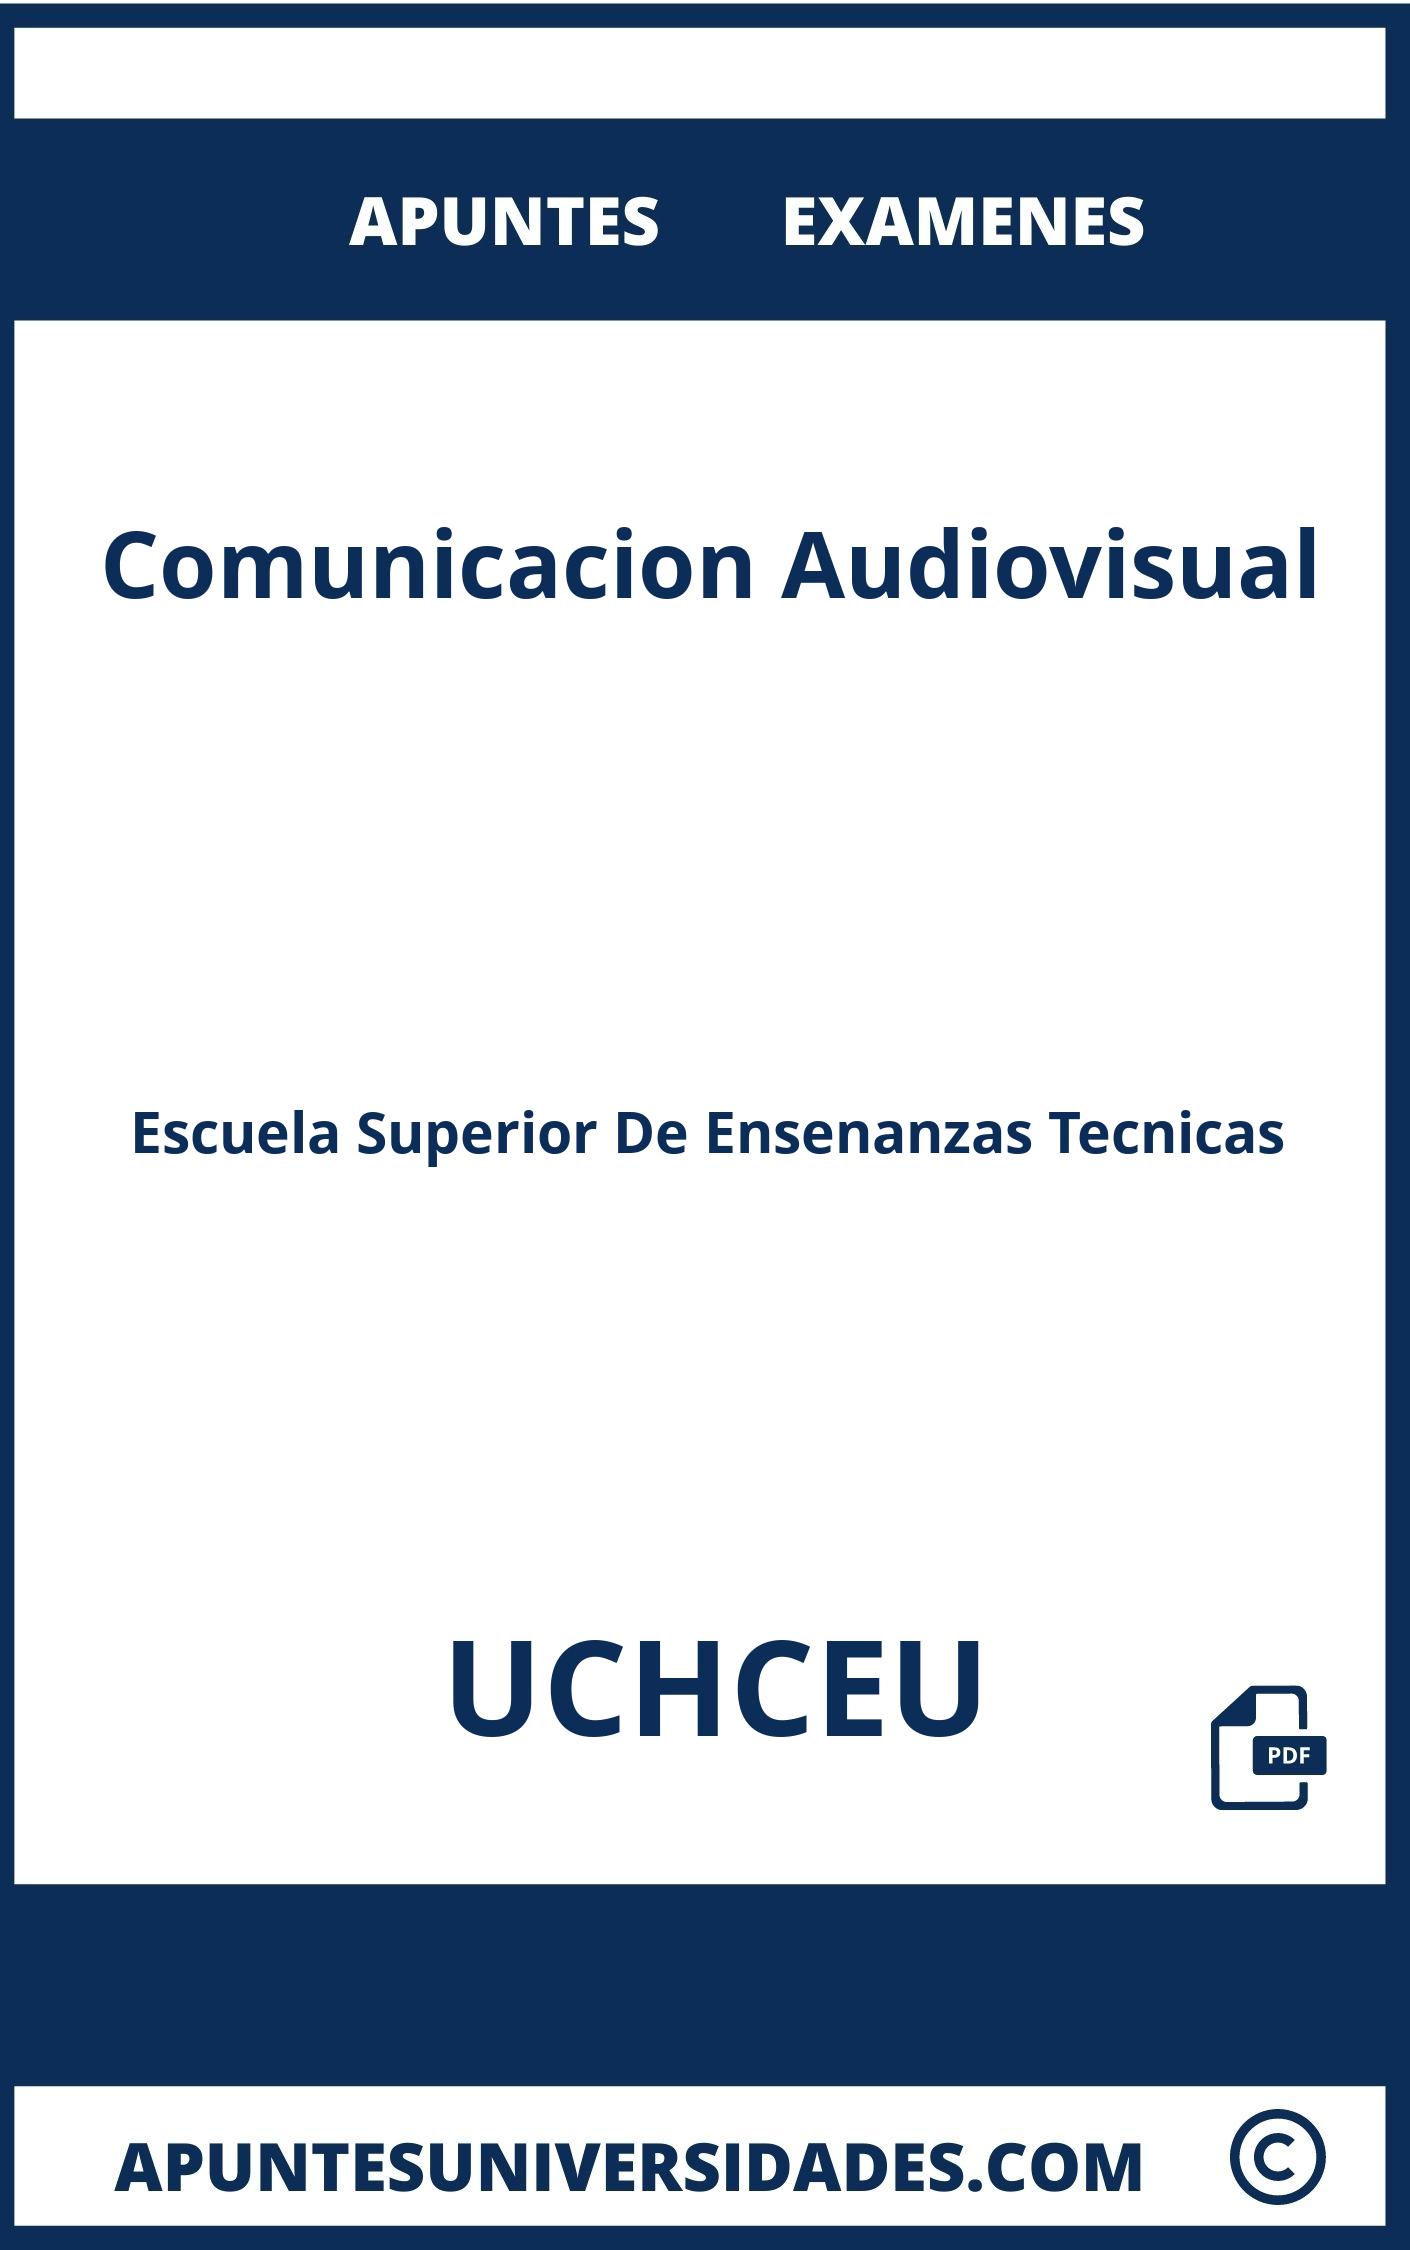 Comunicacion Audiovisual UCHCEU Examenes Apuntes